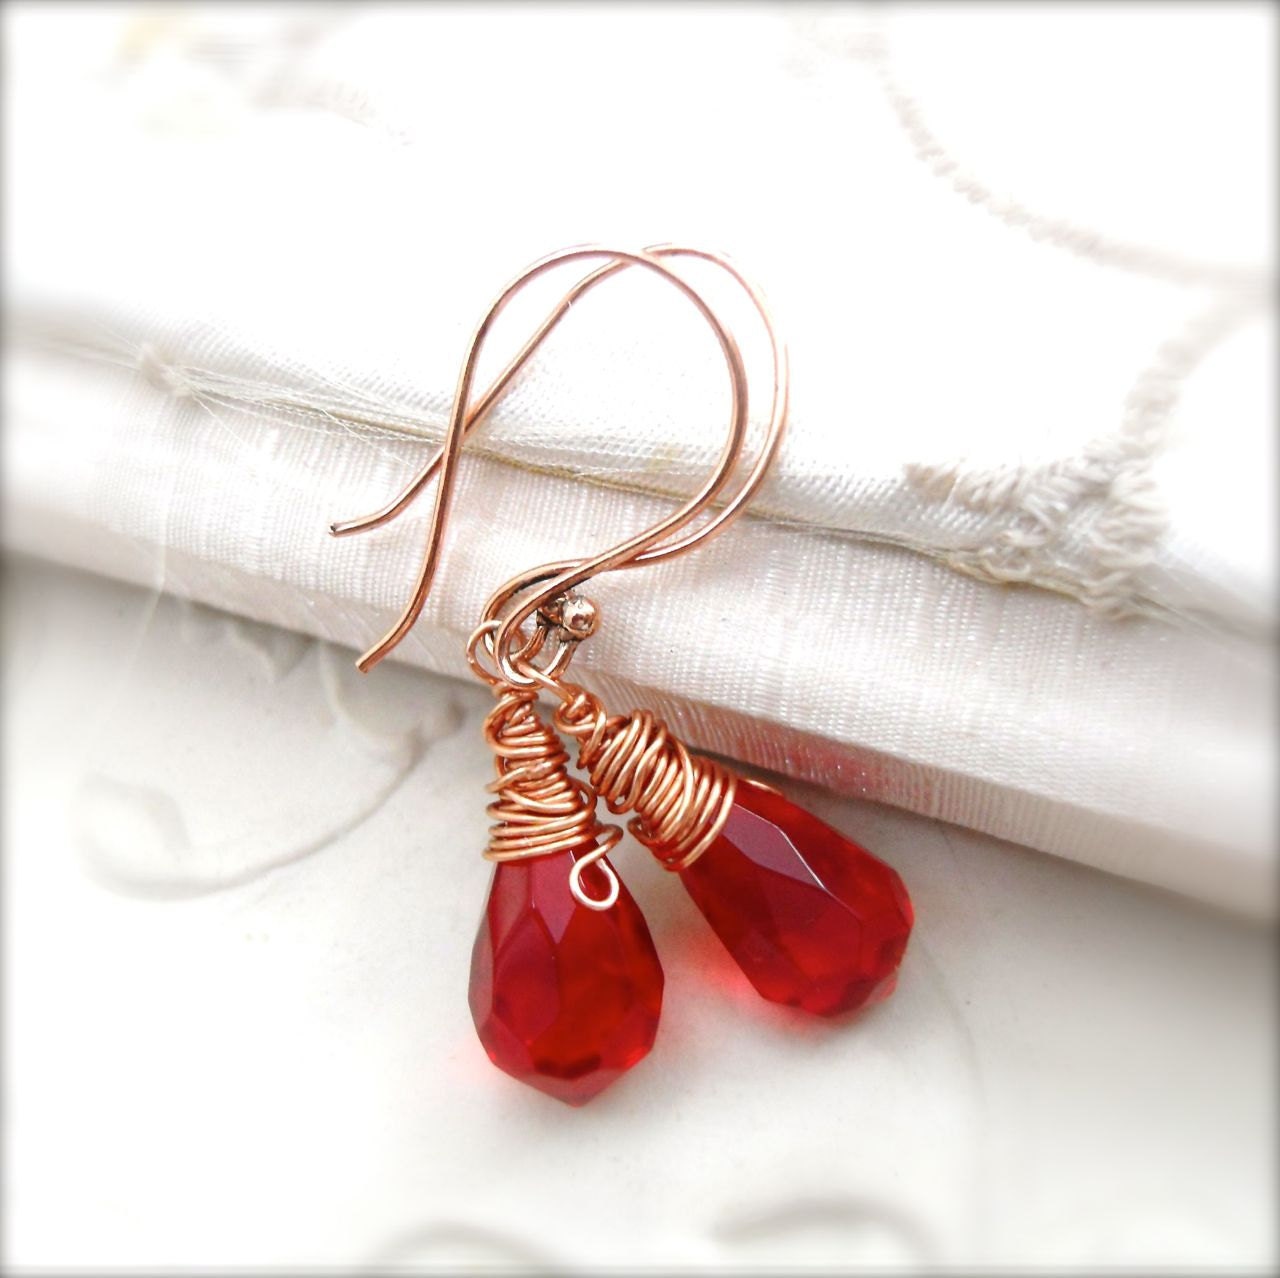  Crystal Earrings on Red Crystal Earrings Teardrop Wire Wrapped Handmade Fashion Jewelry